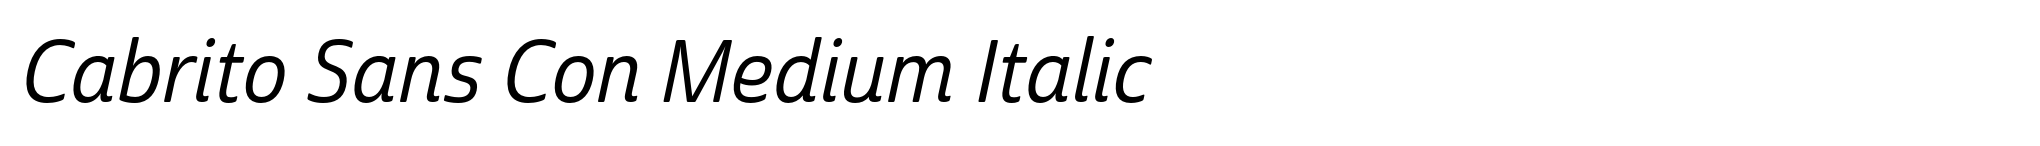 Cabrito Sans Con Medium Italic image